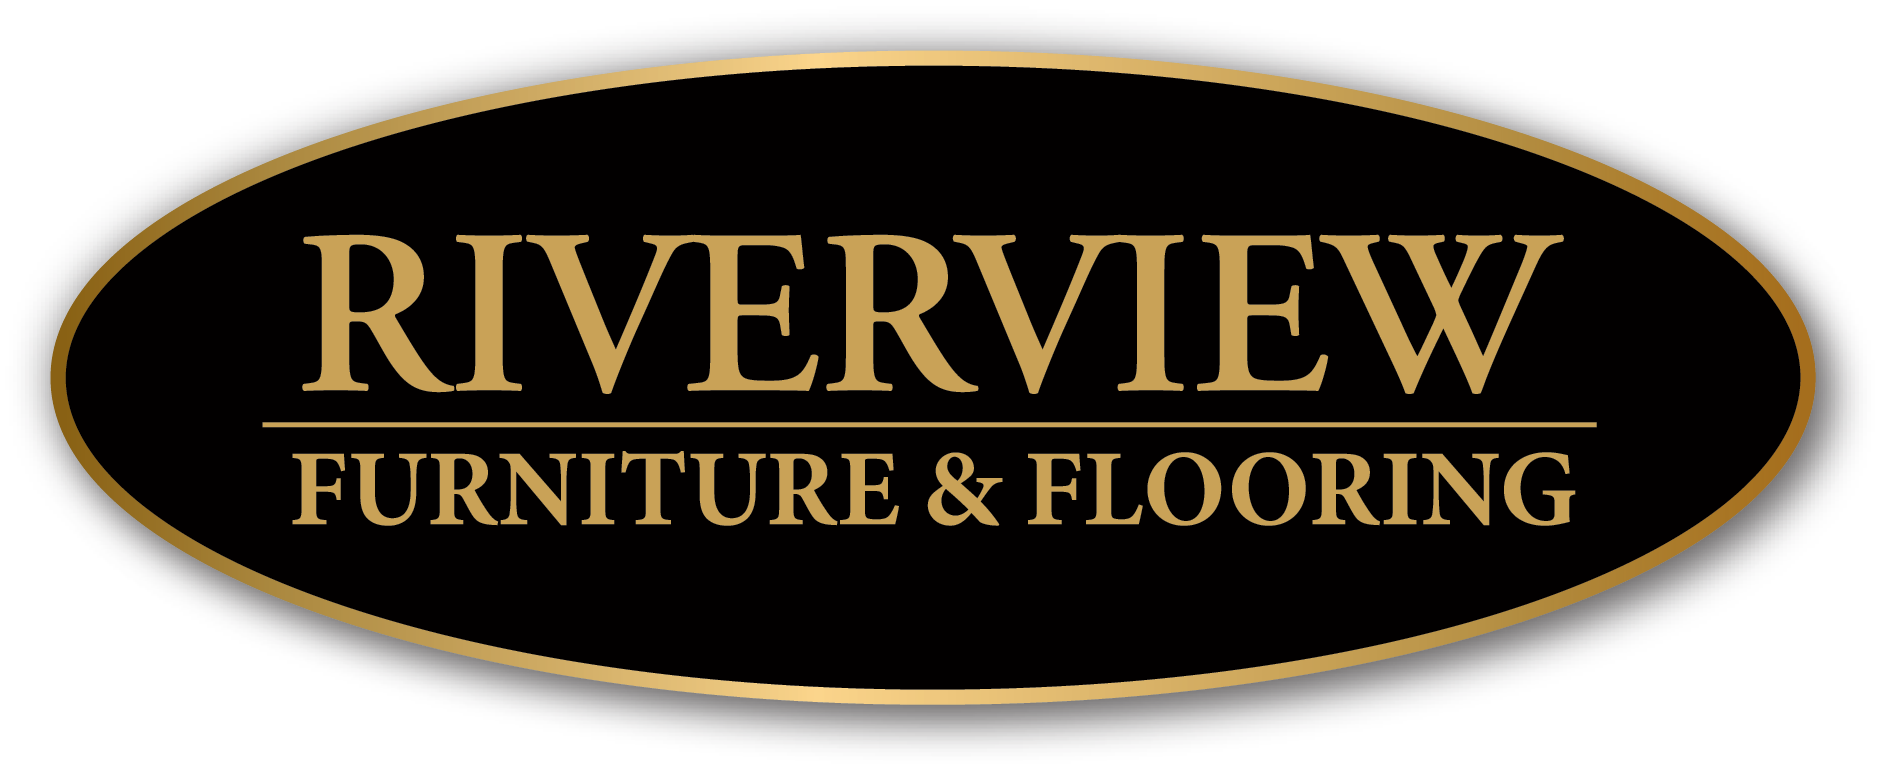 Riverview Furniture & Flooring